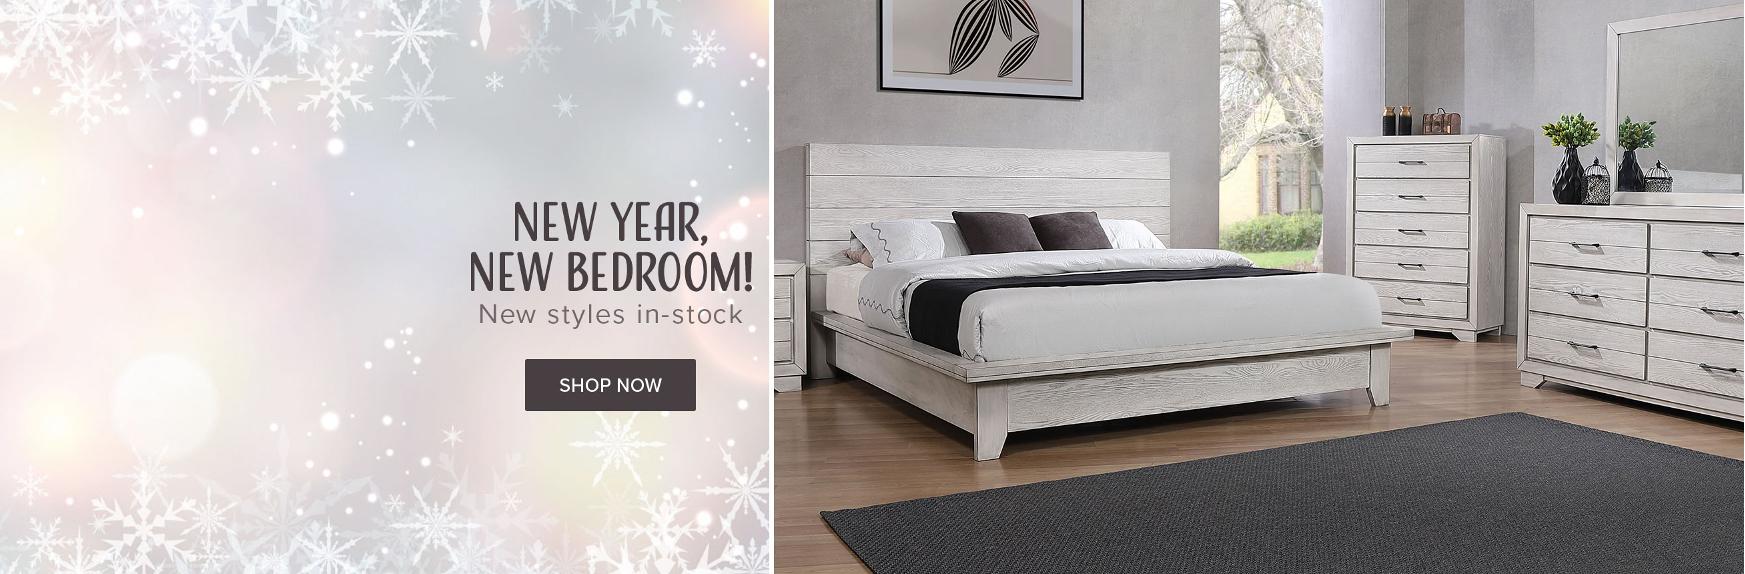 New-Year-New-Bedroom-22